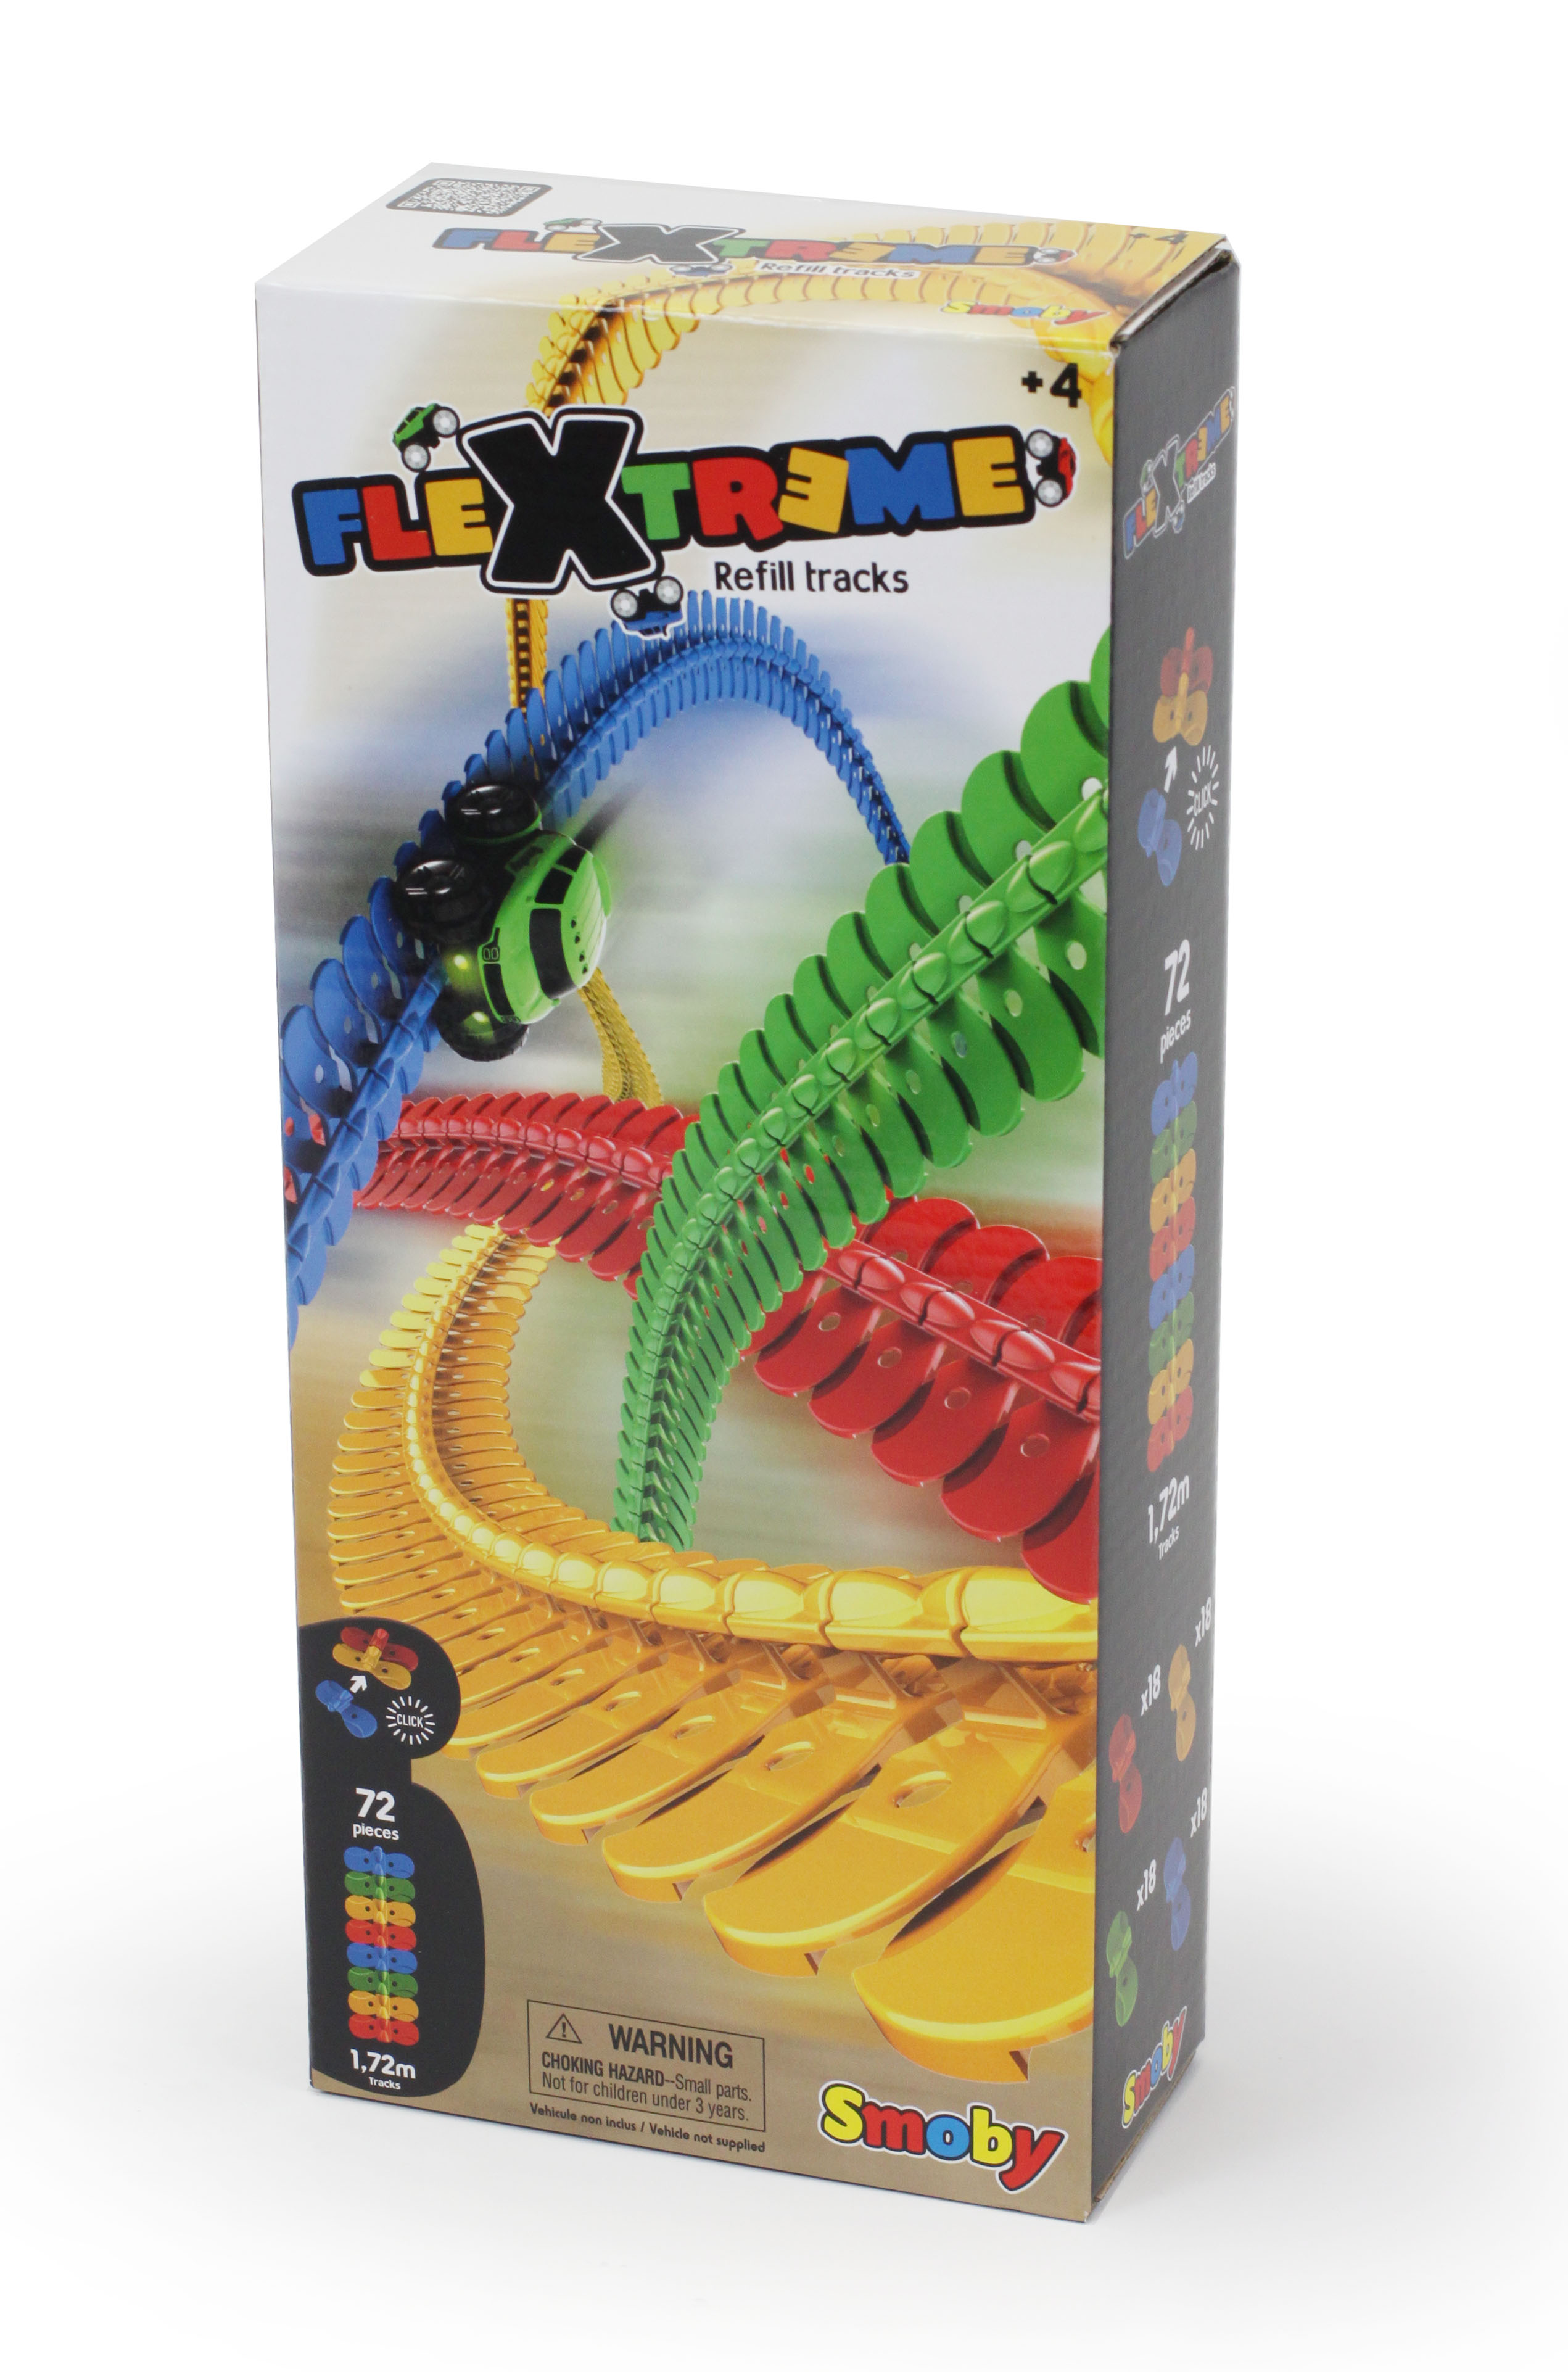 Flextreme Refill Tracks Påbyggnadsset, Smoby